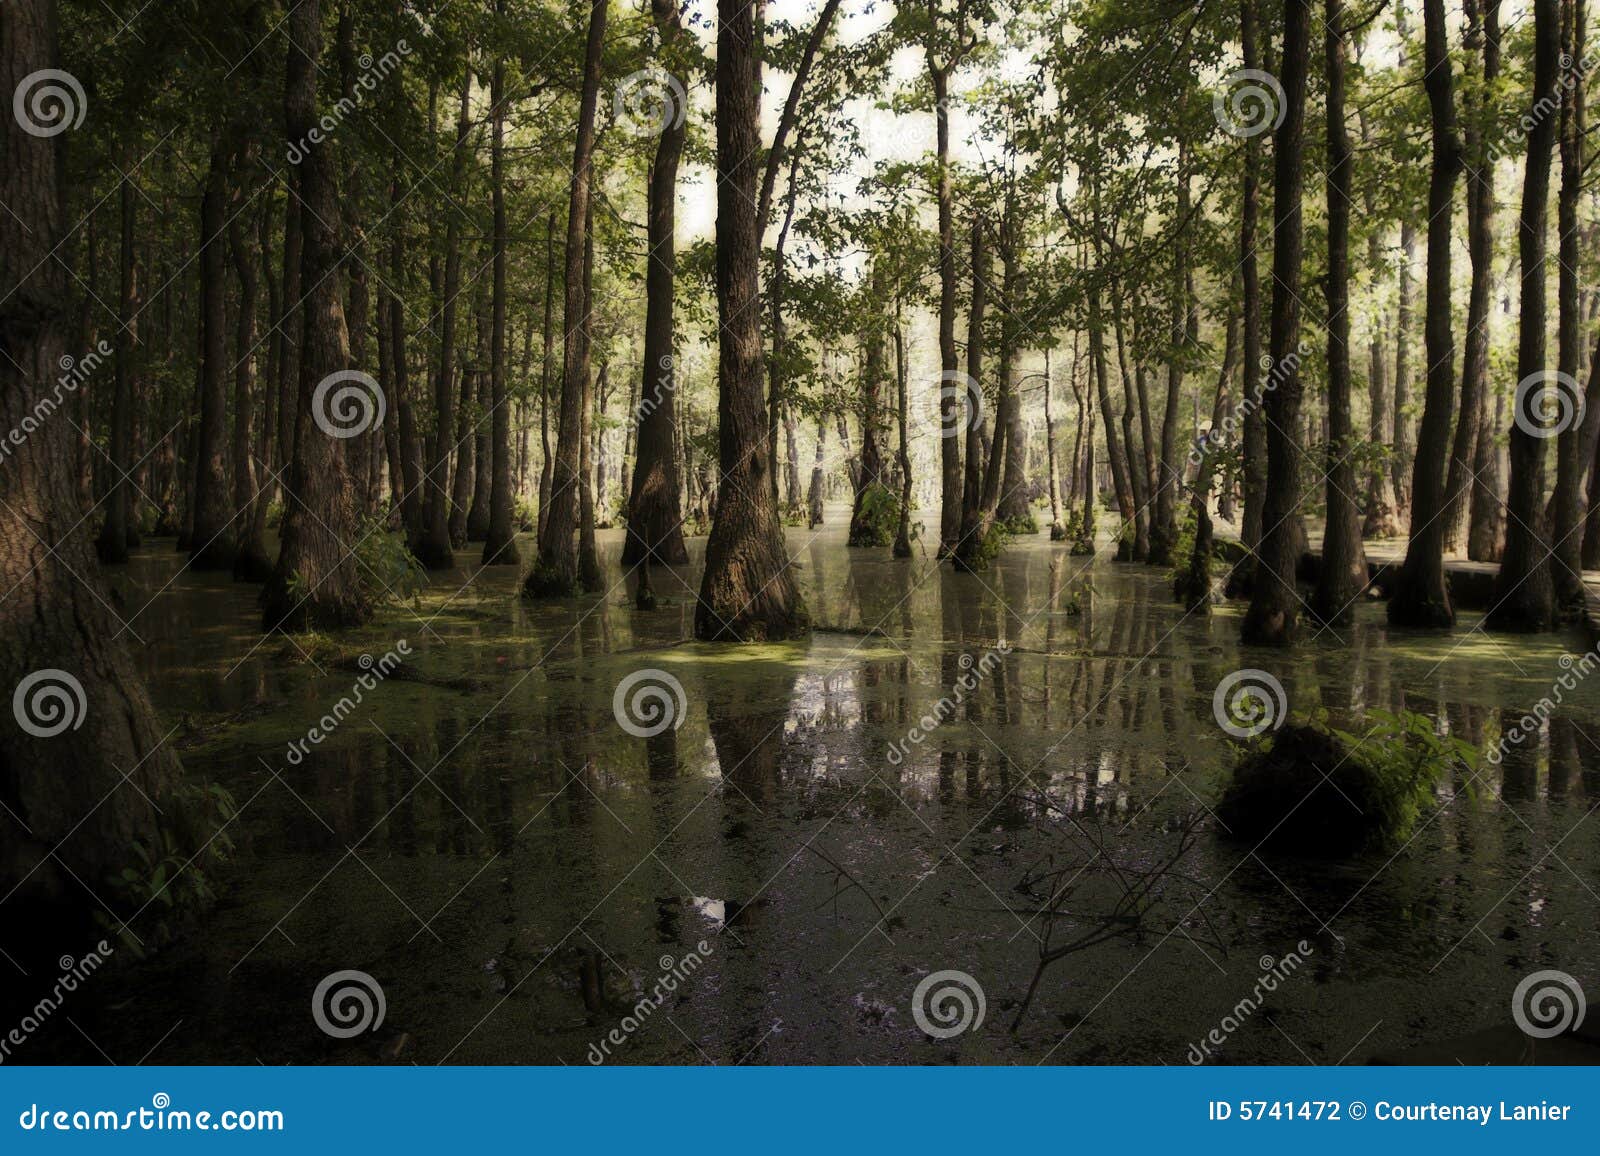 sunlight in the swamp